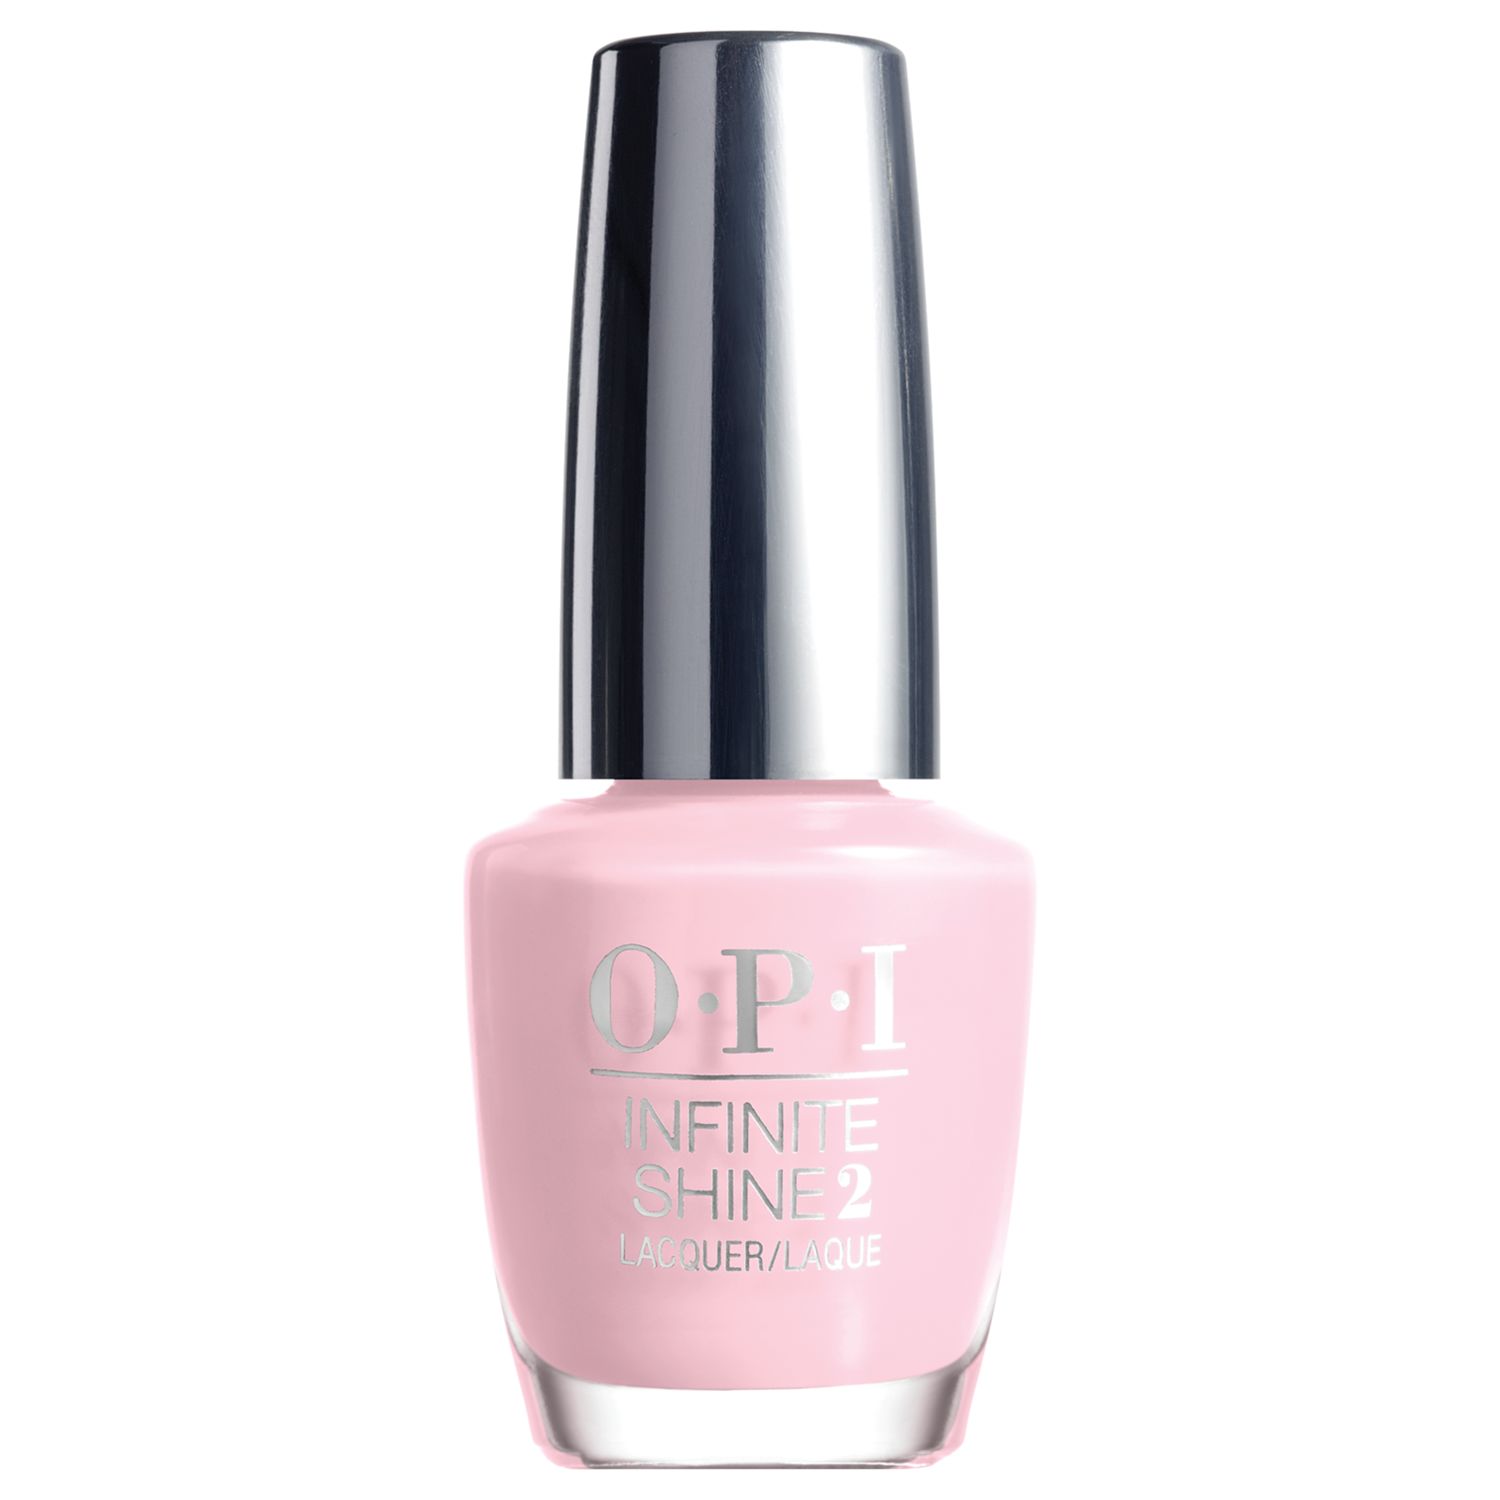 where can you buy opi nail polish